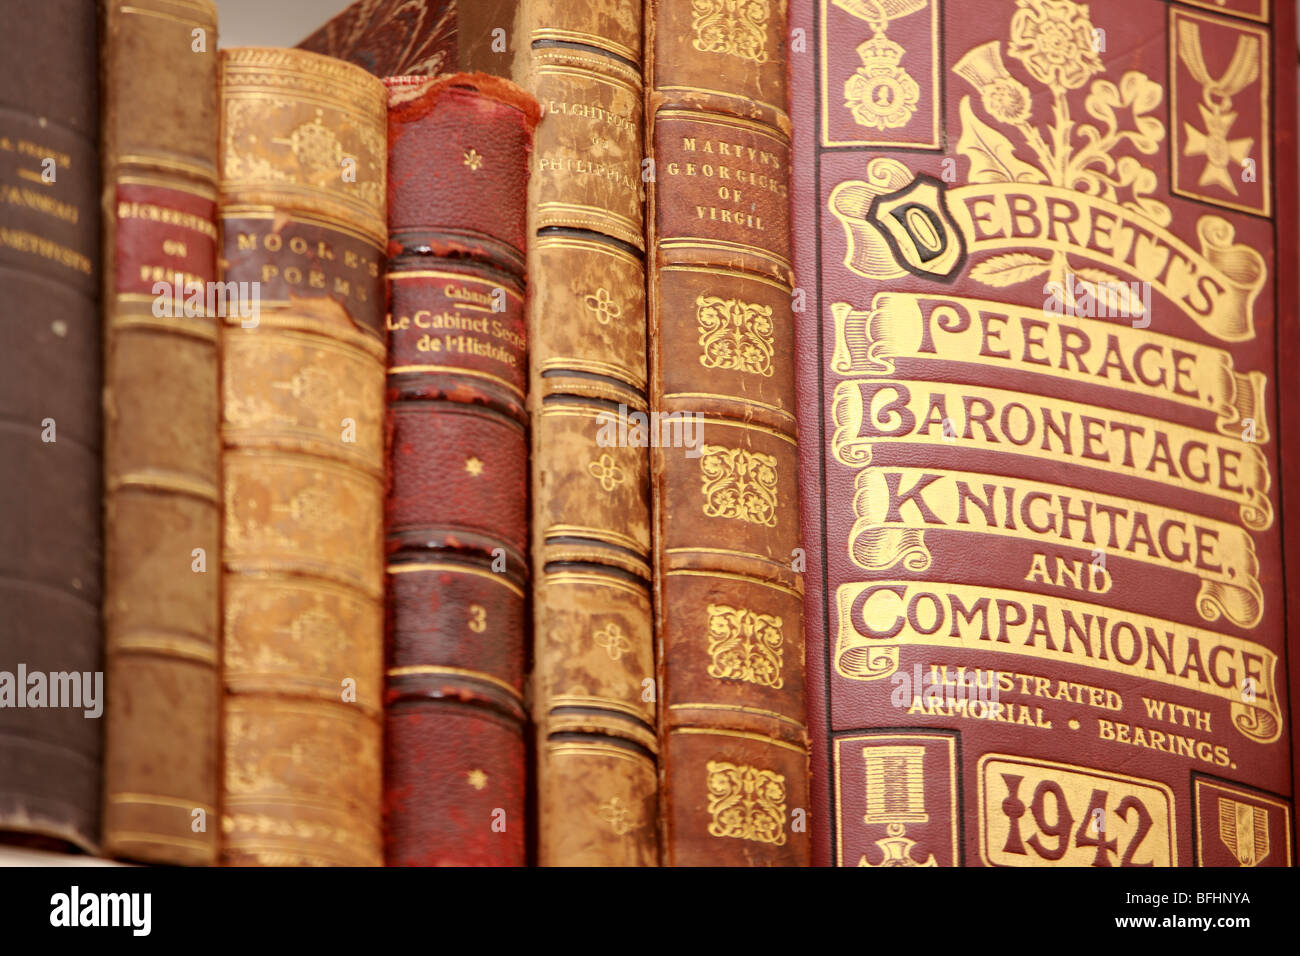 Old books including Debrett's Peerage Baronetage Knightage 1942 on a book shelf Stock Photo